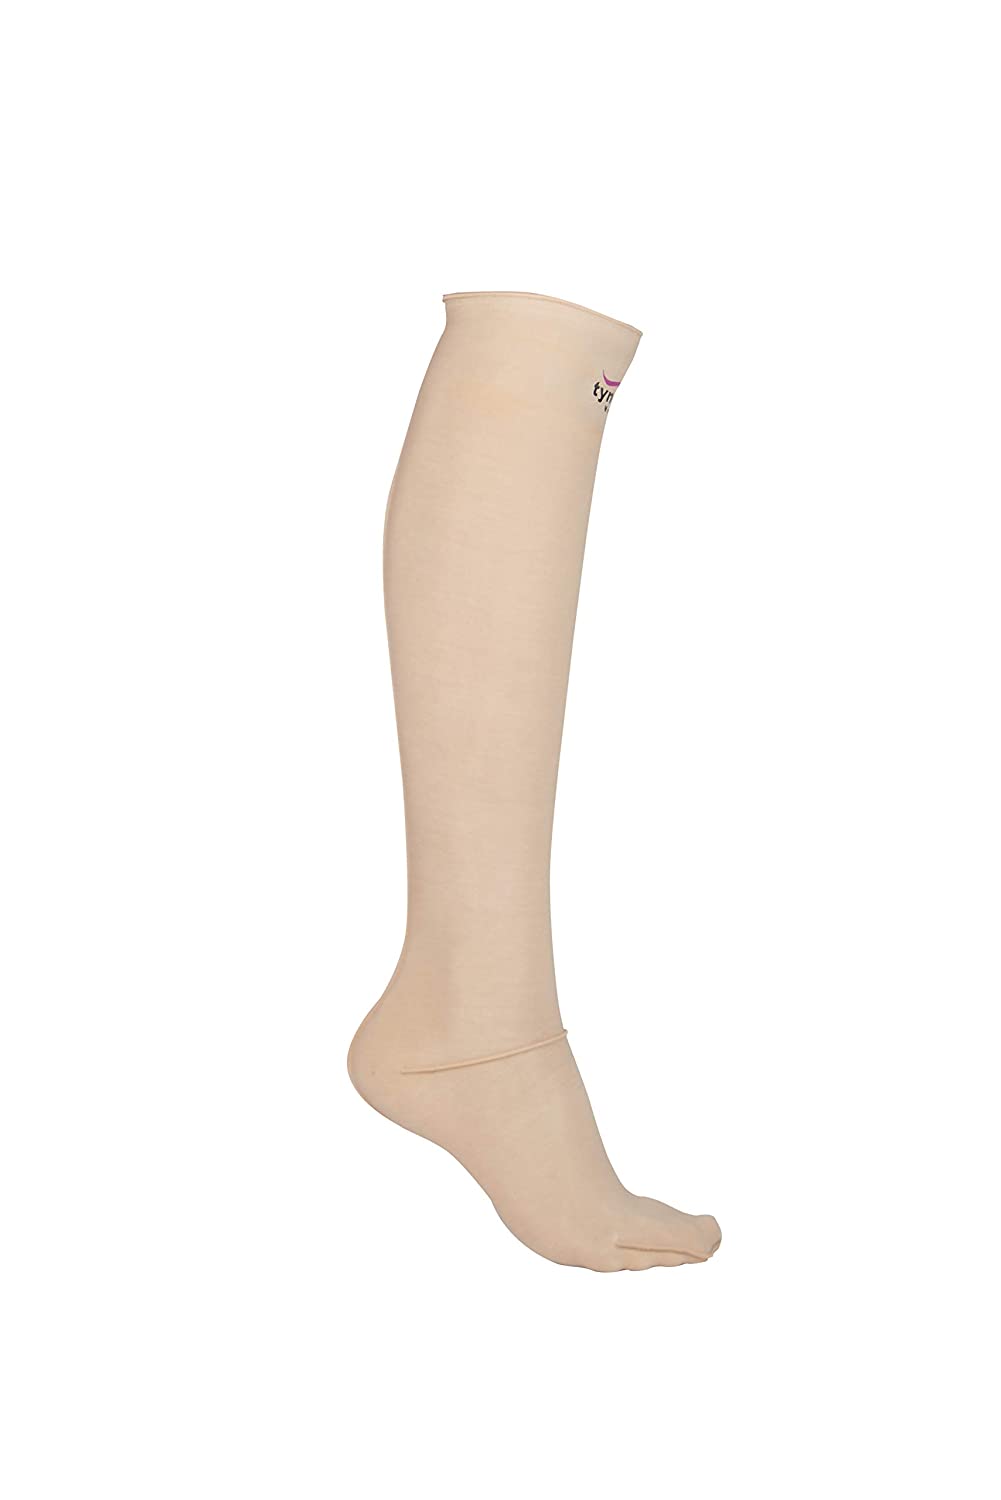 AHS Compression Stockings Leg Below Knee (Closed Toe) 20-30mmHg-4